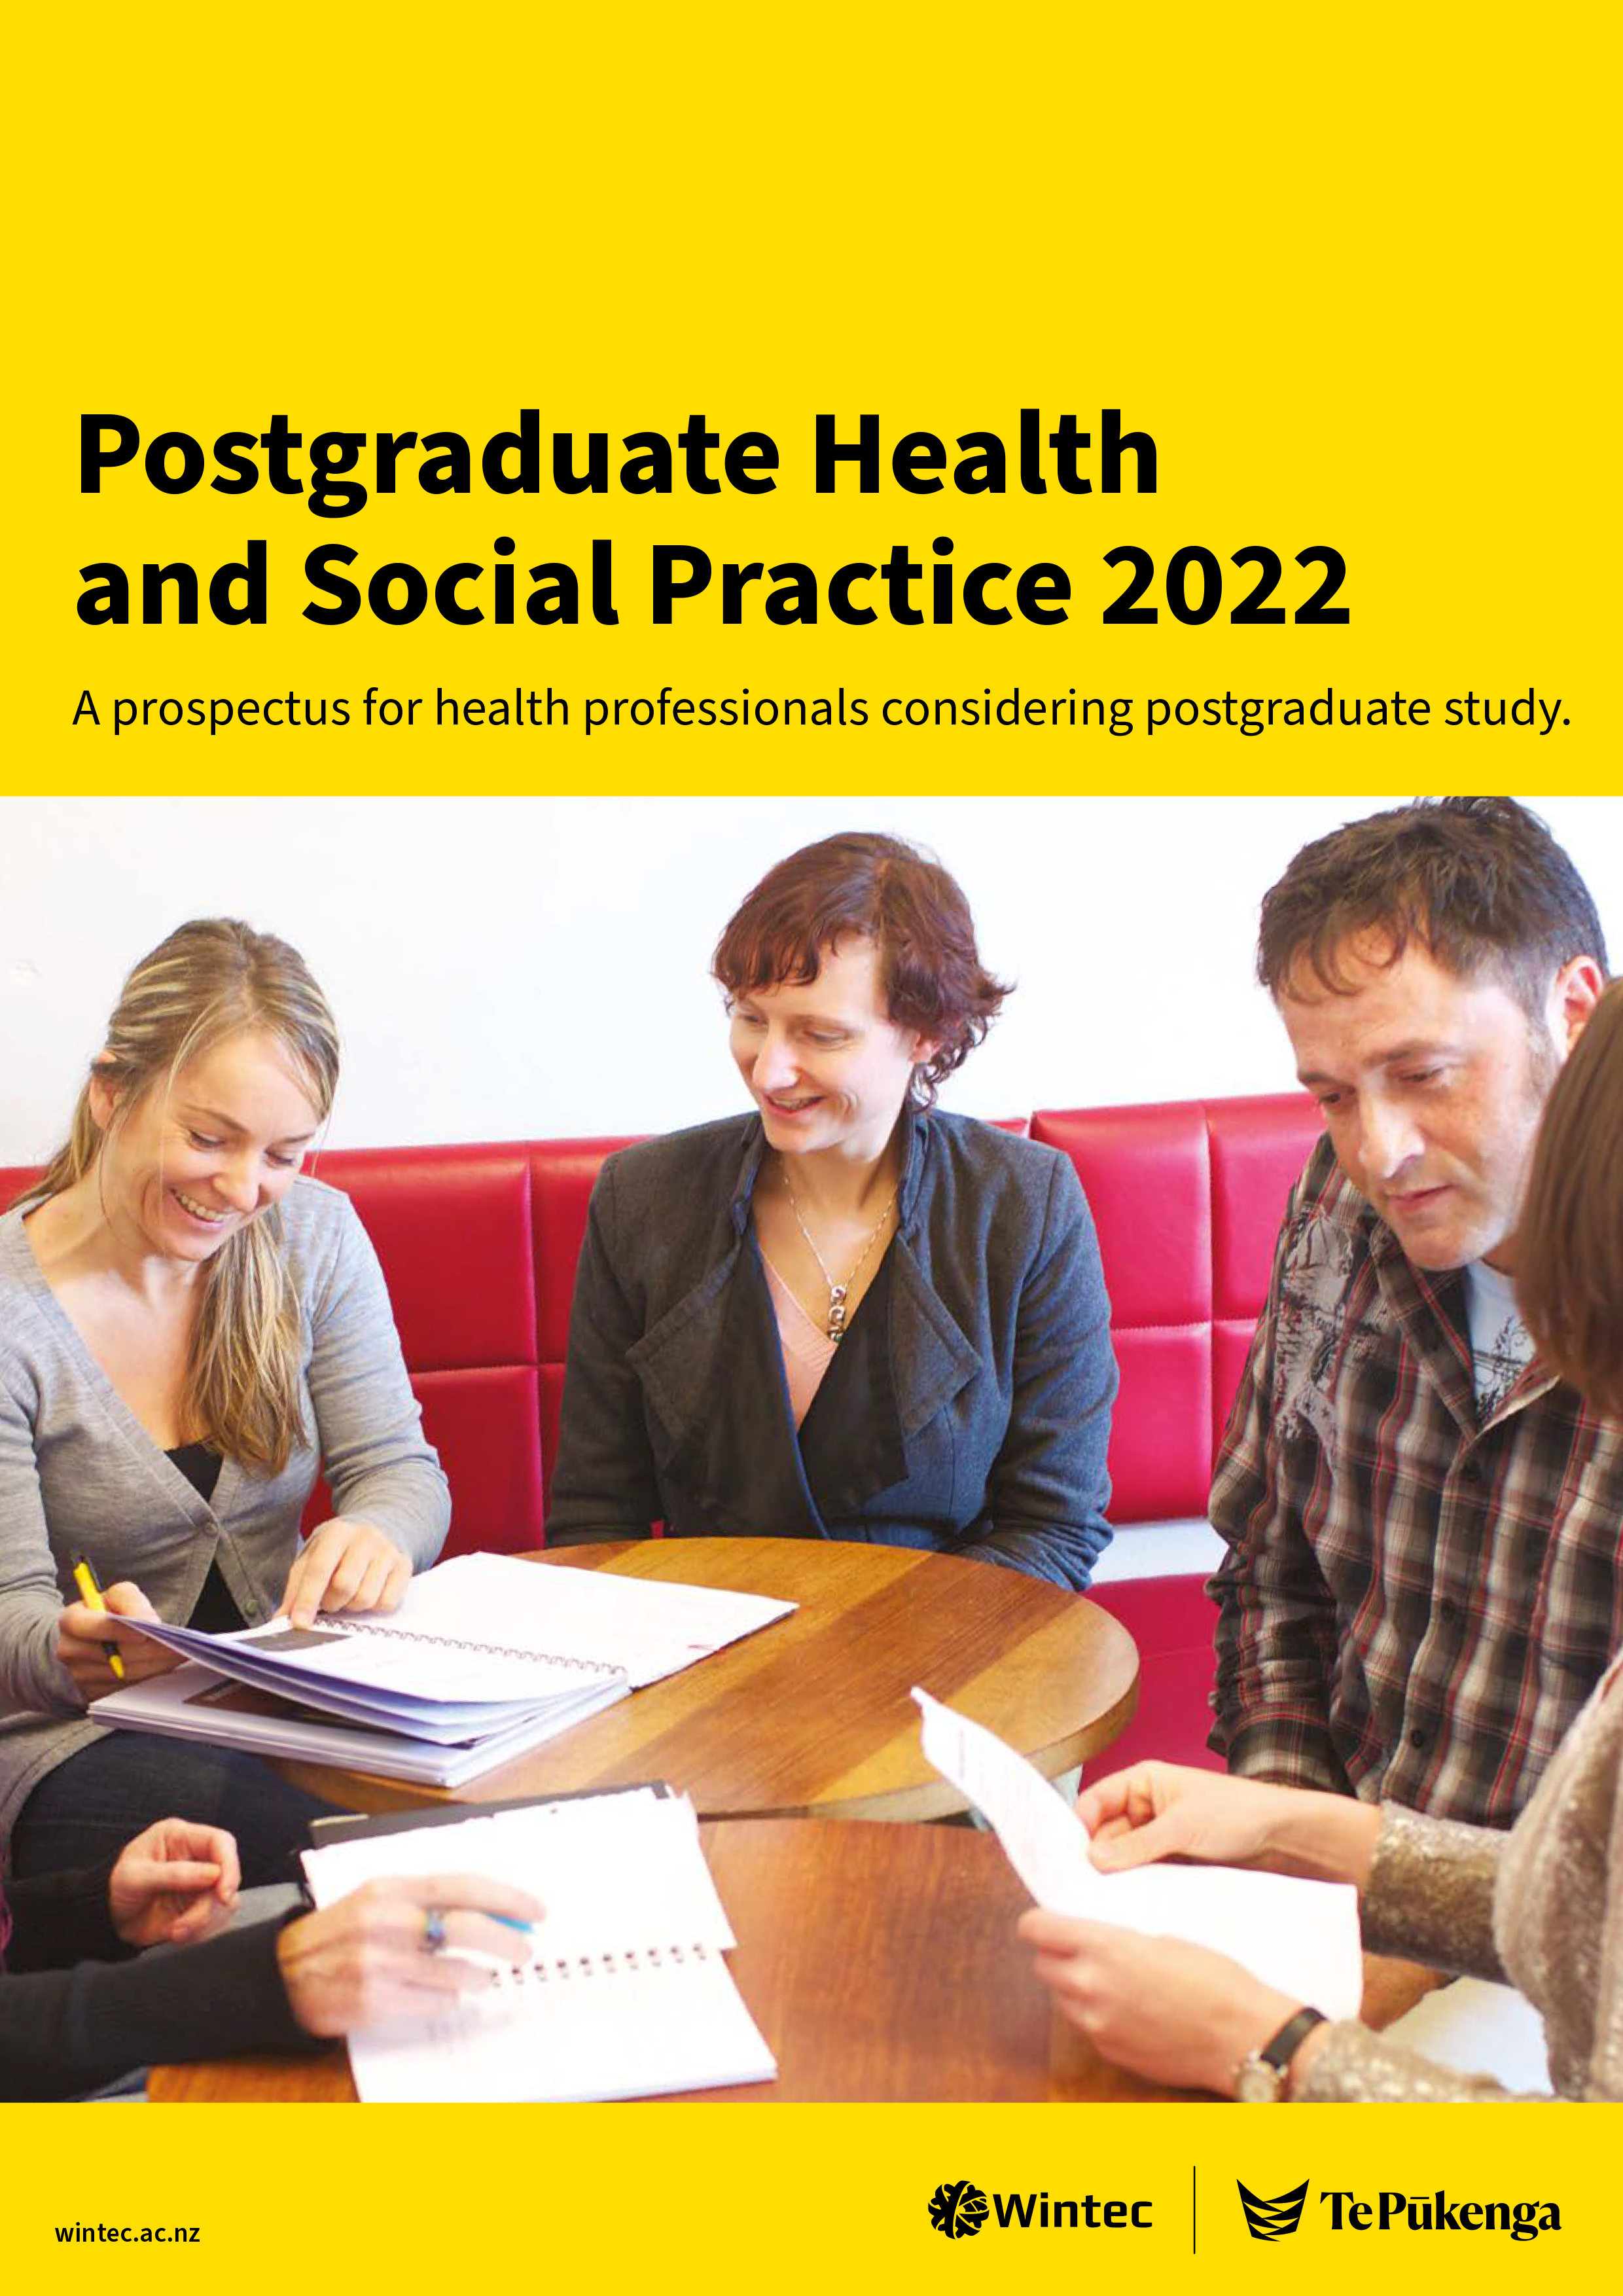 Postgraduate health and social practice prospectus